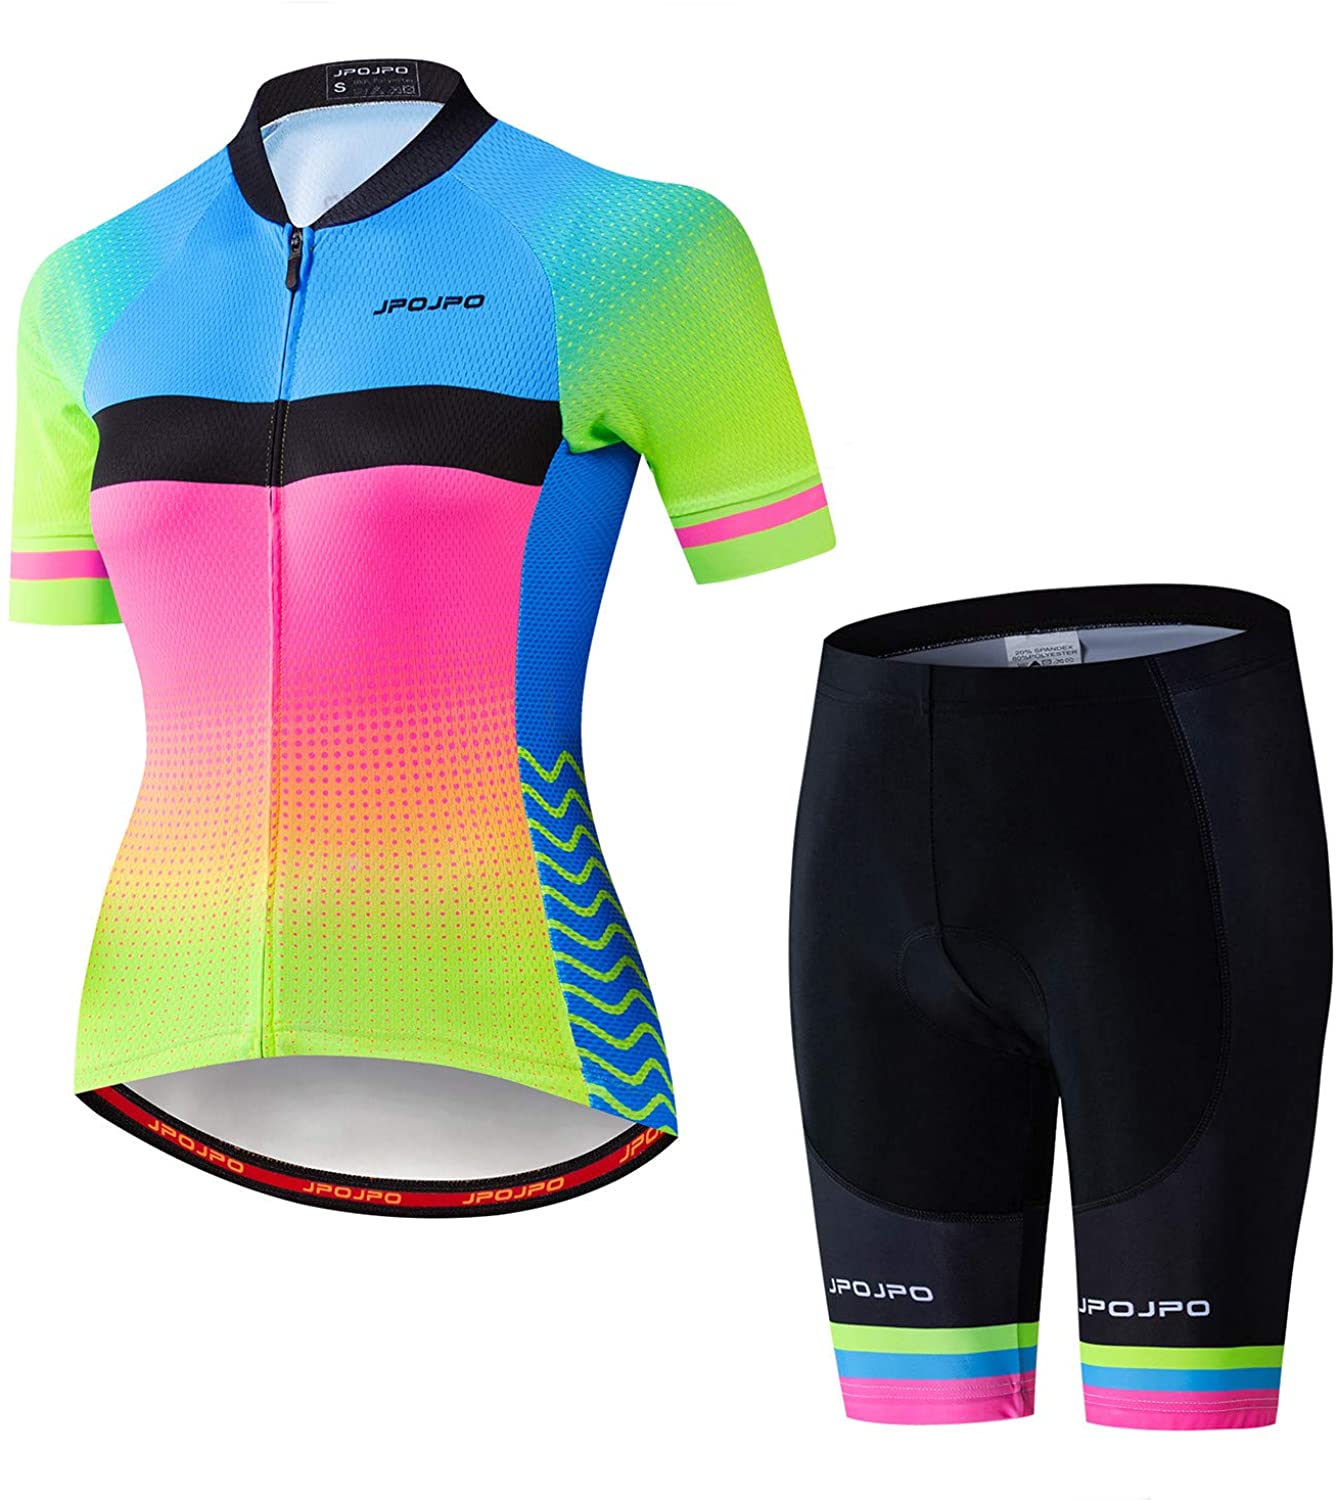 JPOJPO Women's Cycling Jersey Set Long Sleeve Bike Clothing Autumn Winter Reflective+5D Padded Long Pants S-2XL